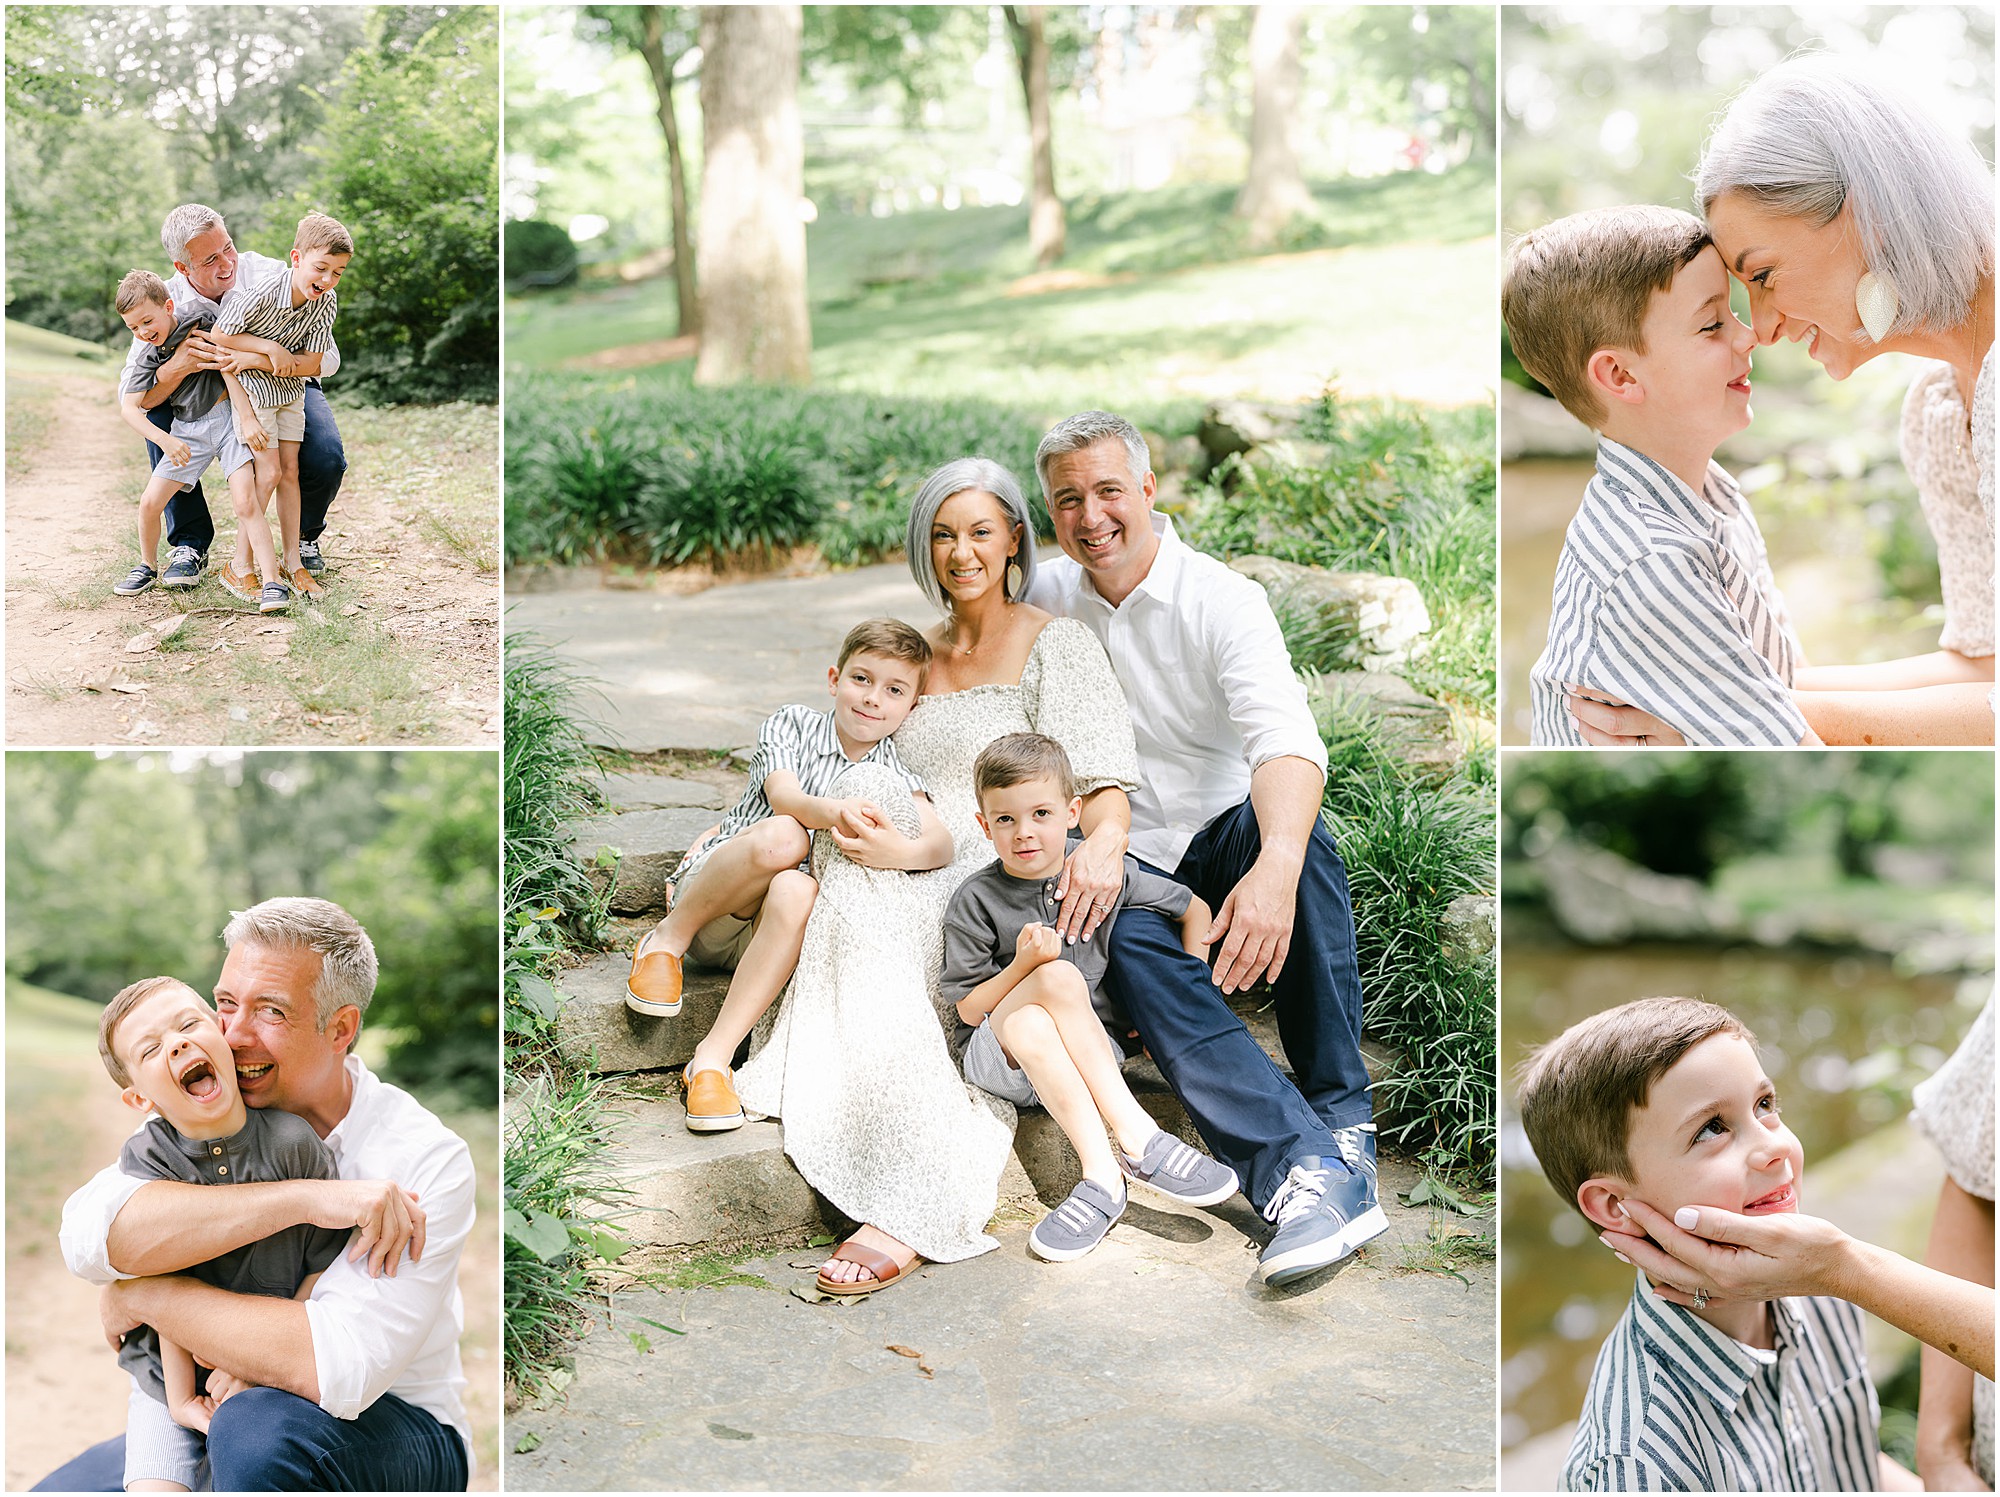 Atlanta family photography session by Lindsey Powell at Winn Park.